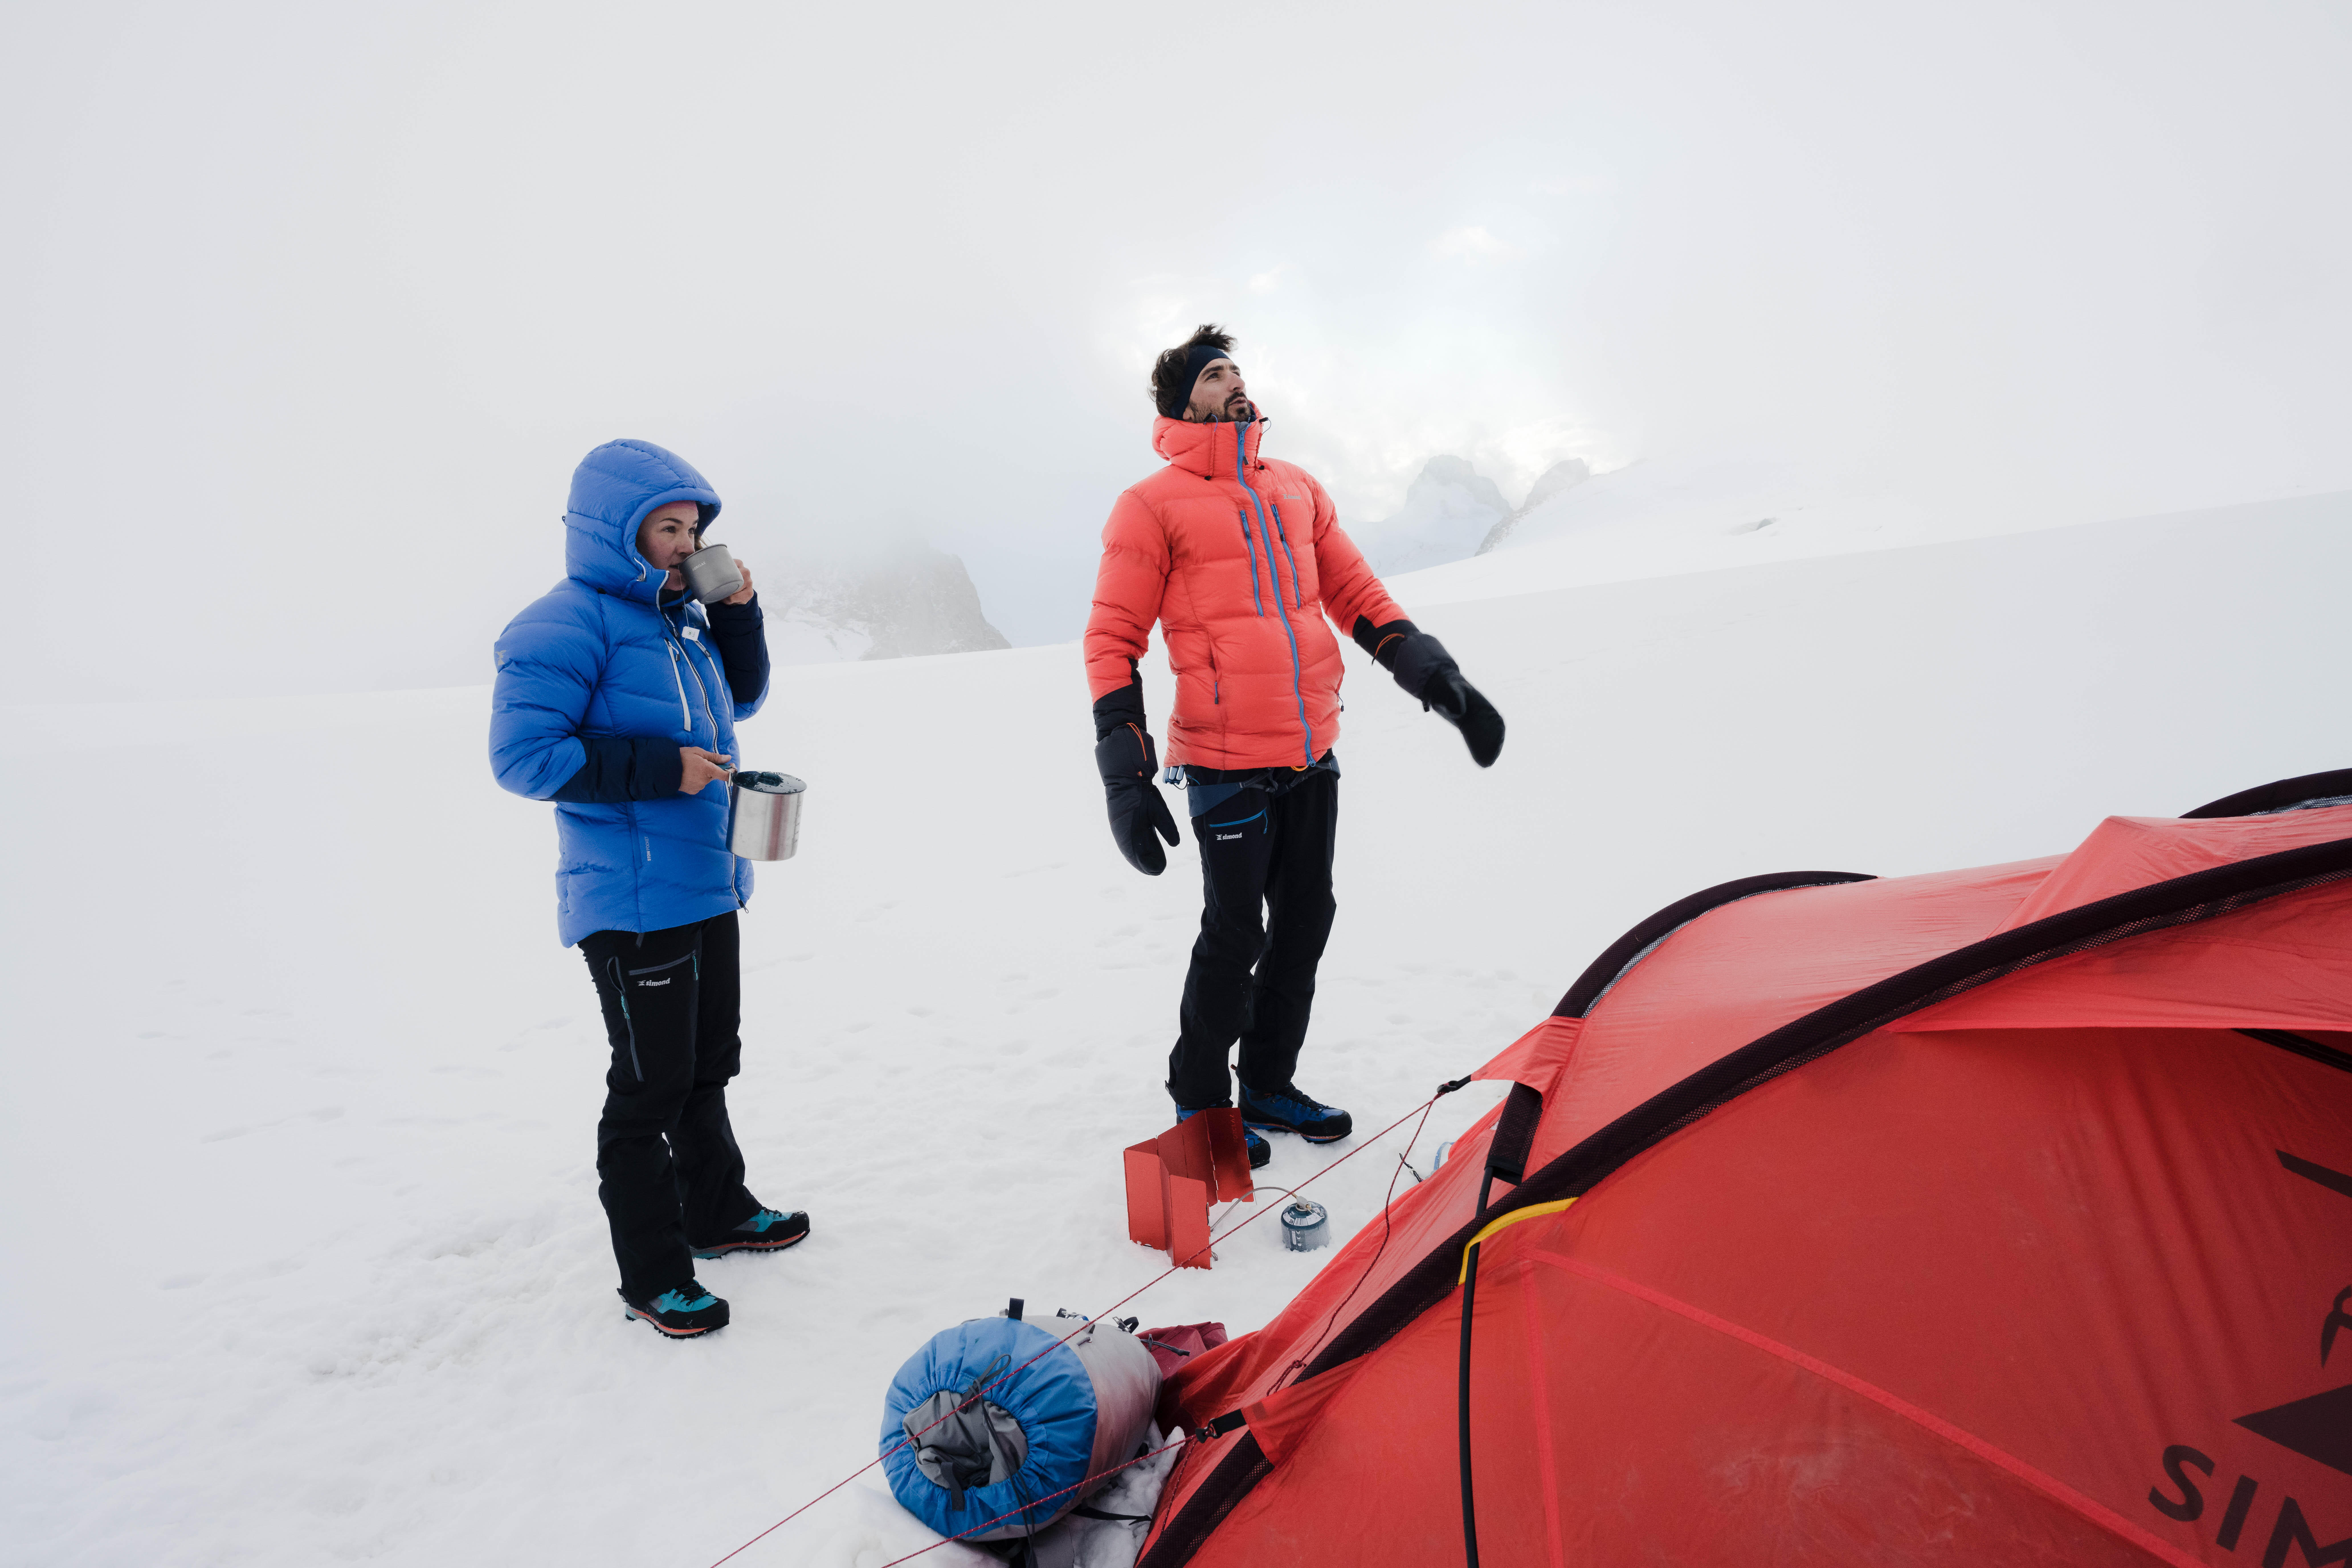 Women's Mountaineering pants - Alpinism Black - SIMOND